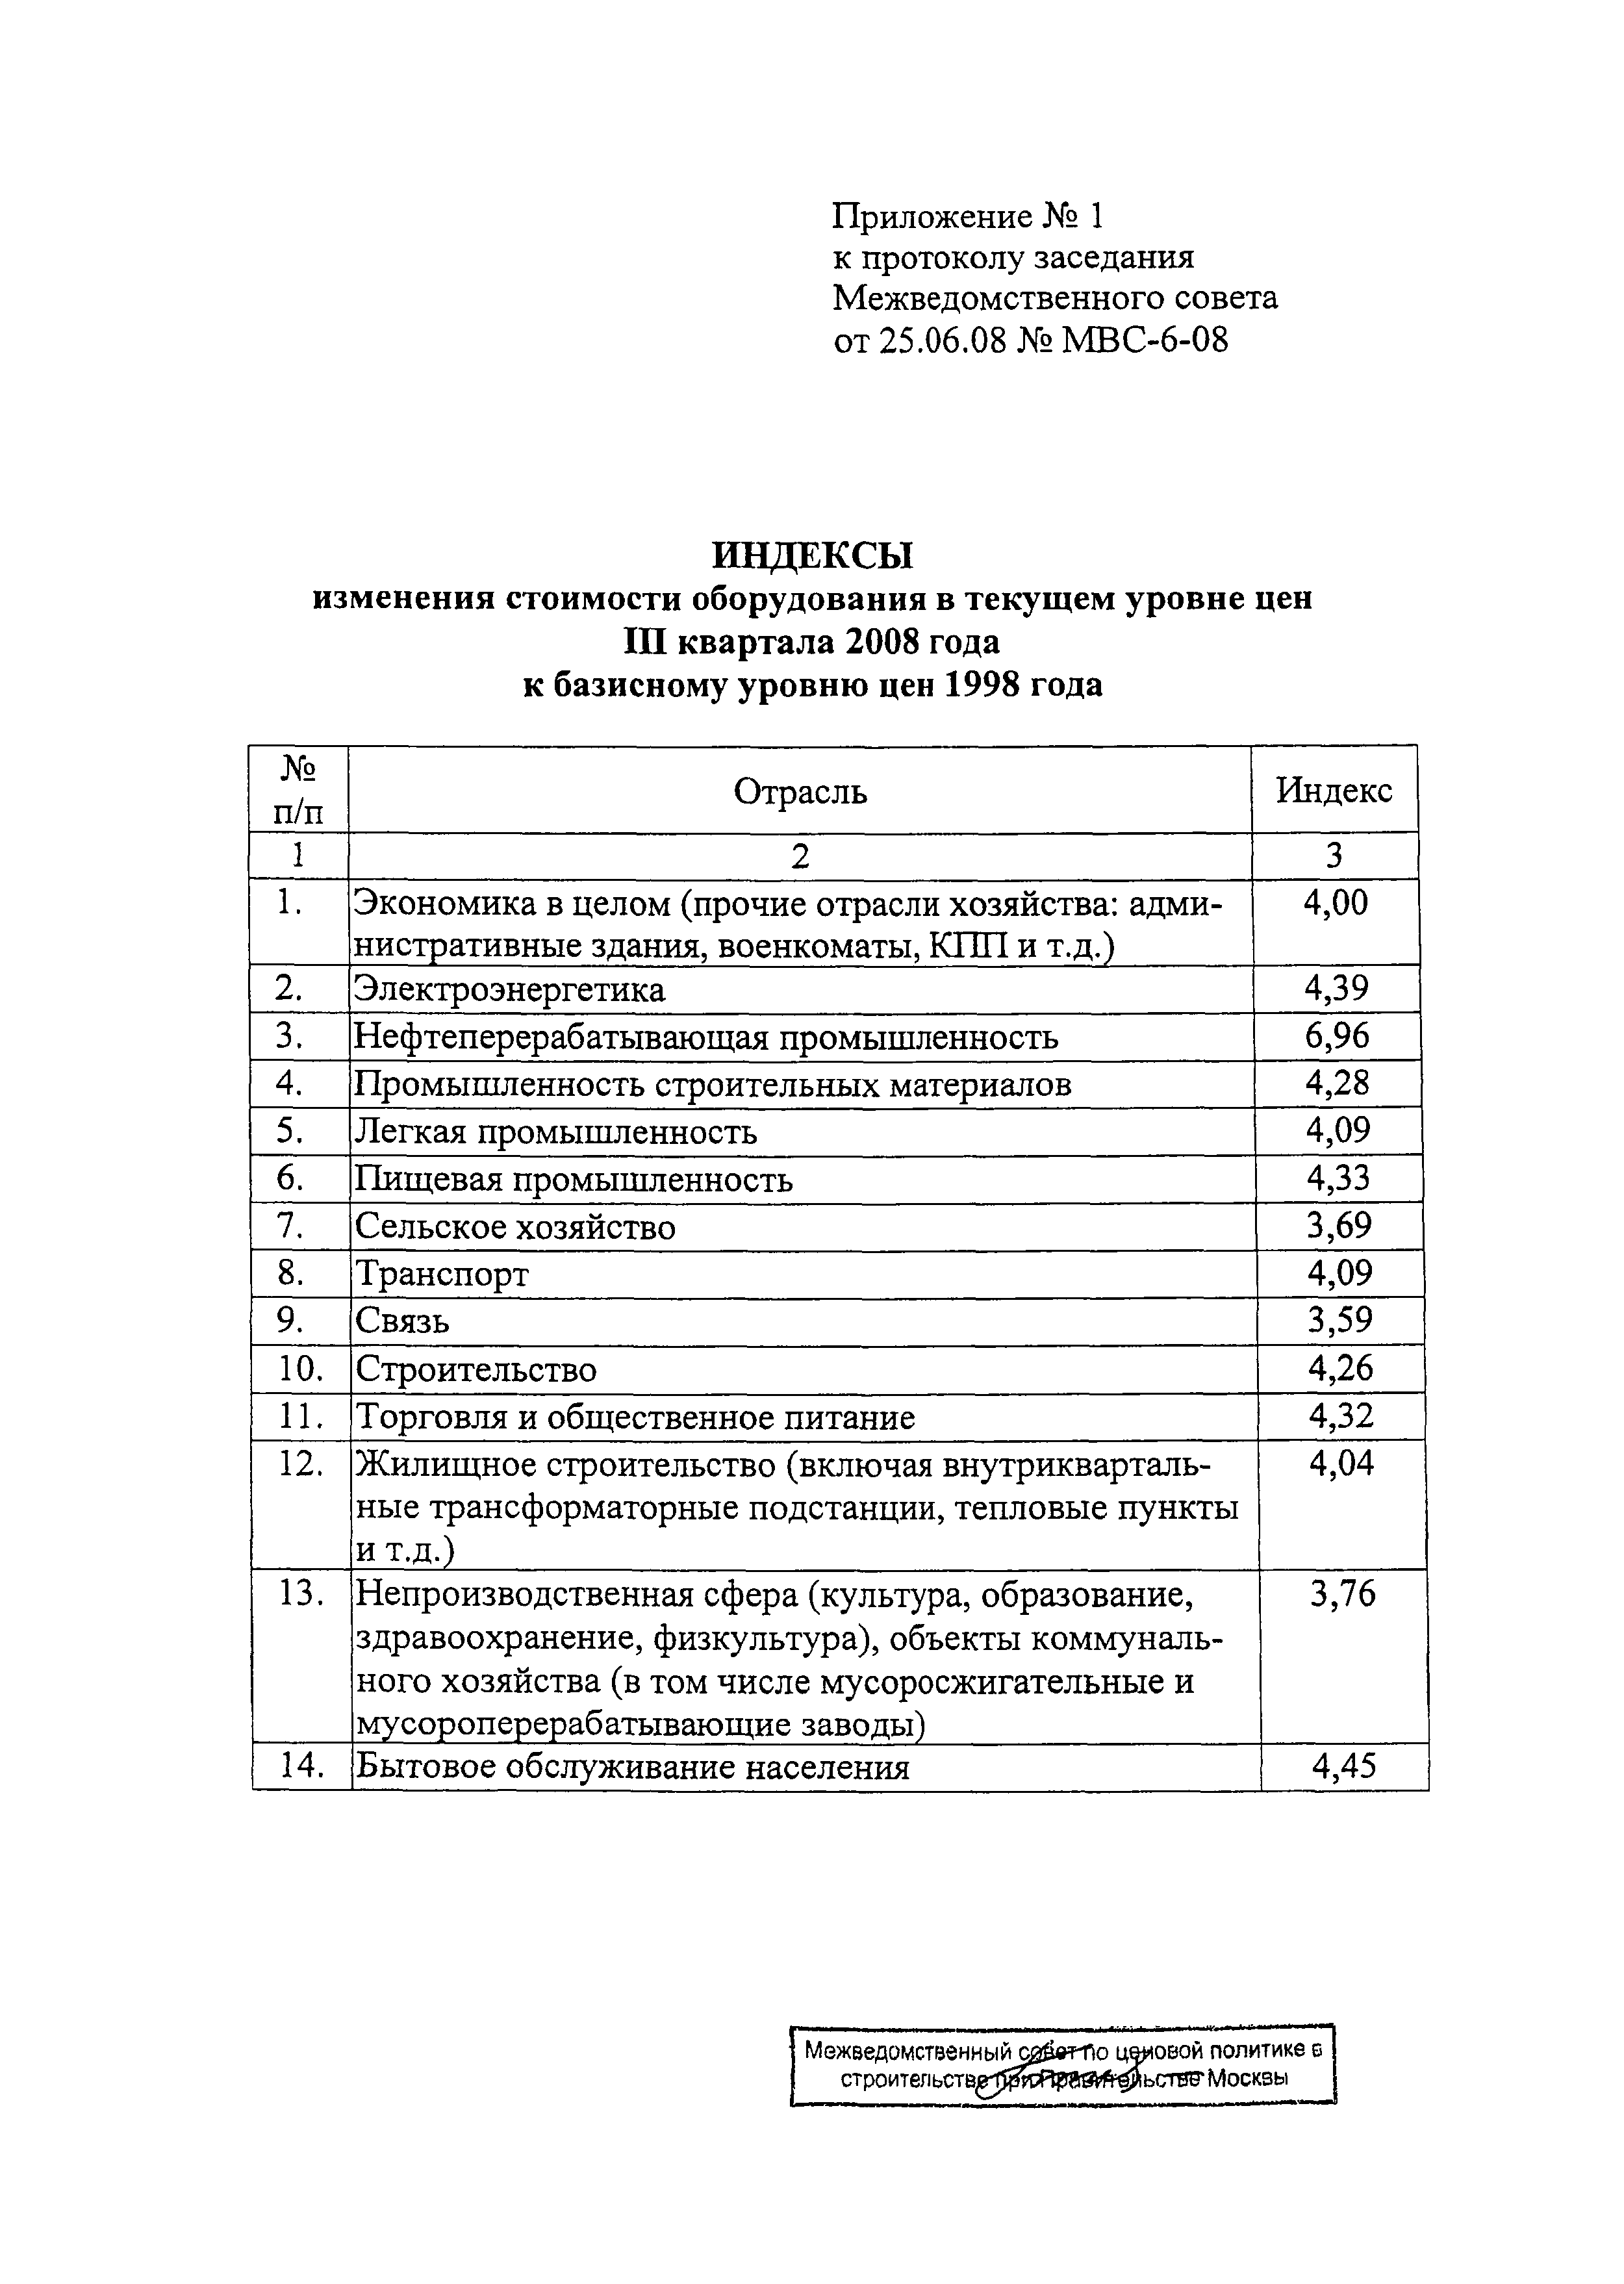 Протокол МВС-6-08